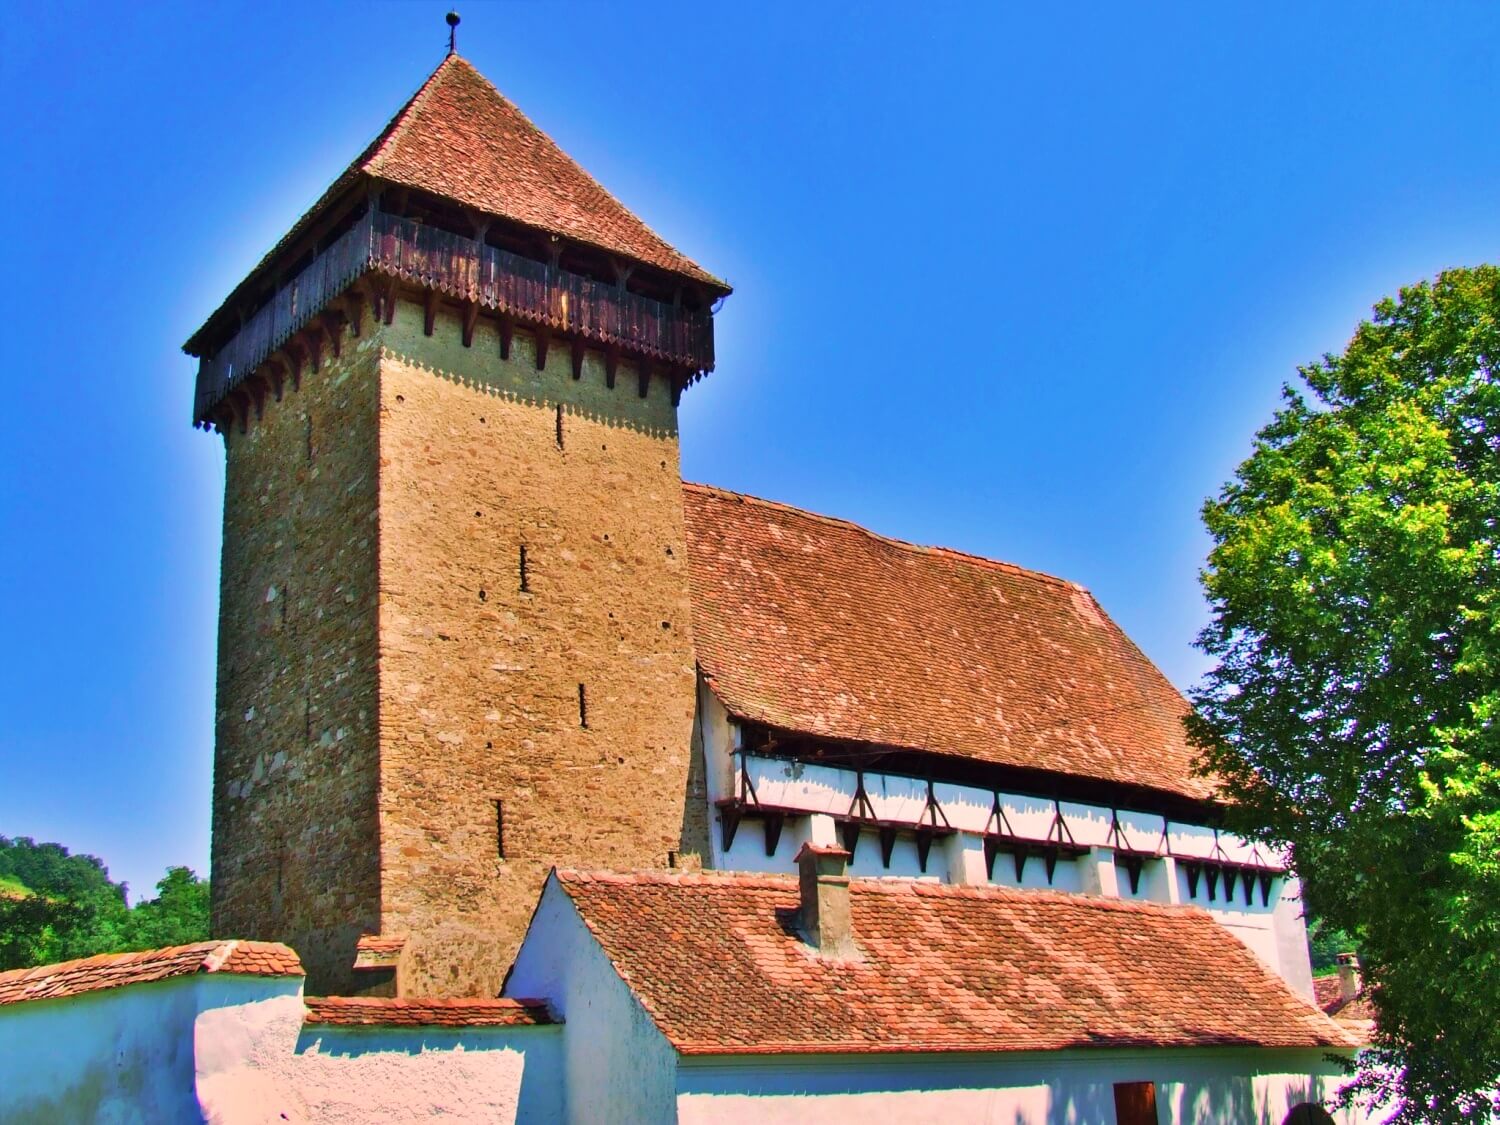 The fortified church from Stejărişu